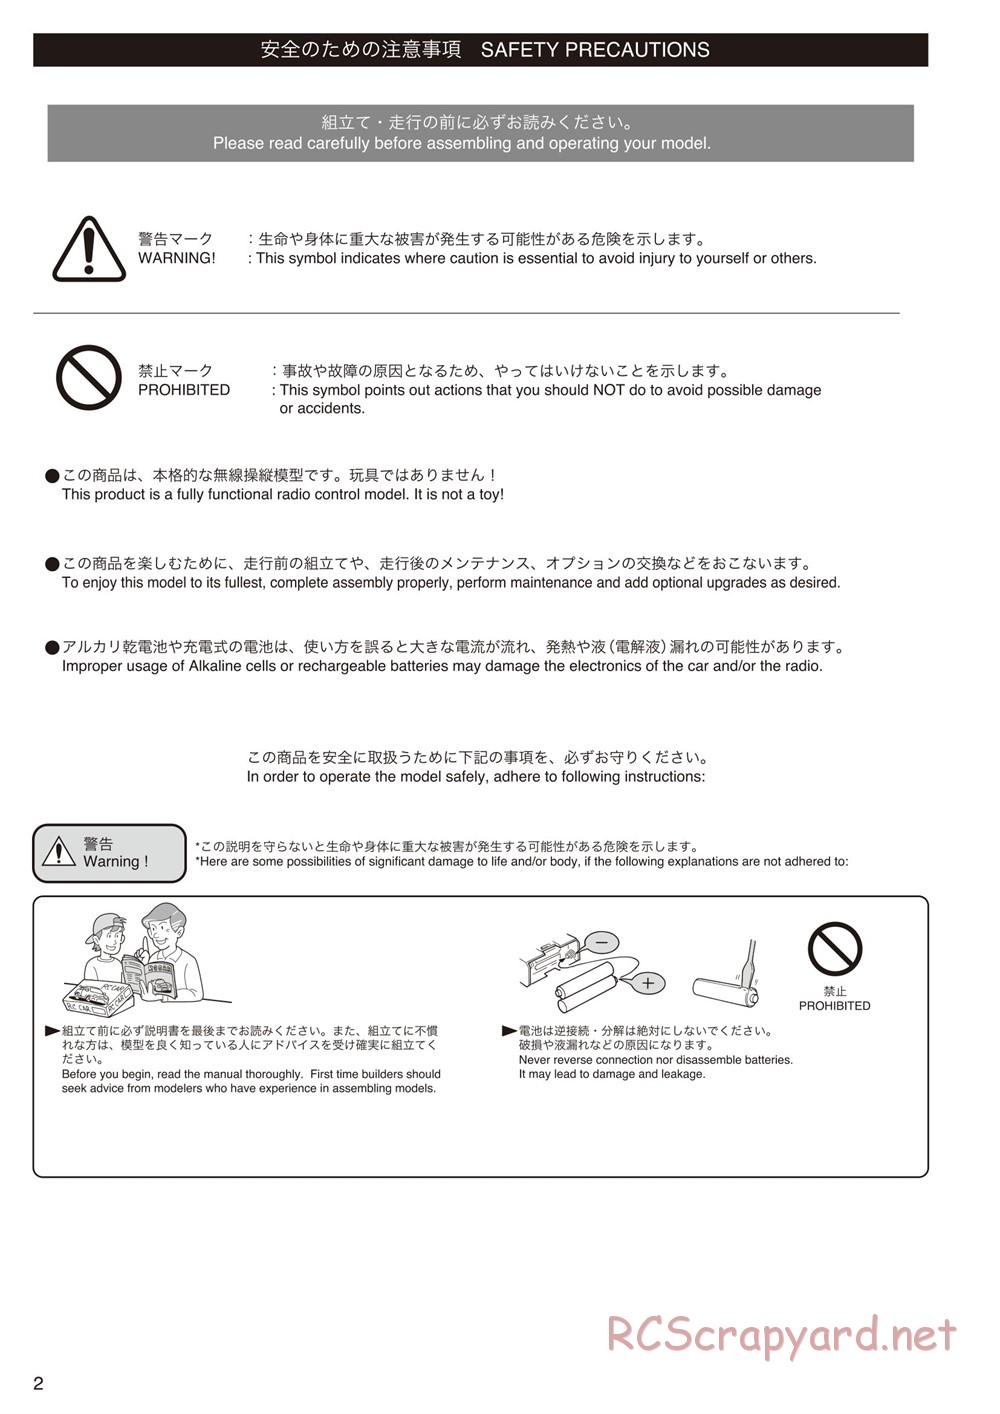 Kyosho - Ultima RT6 - Manual - Page 2